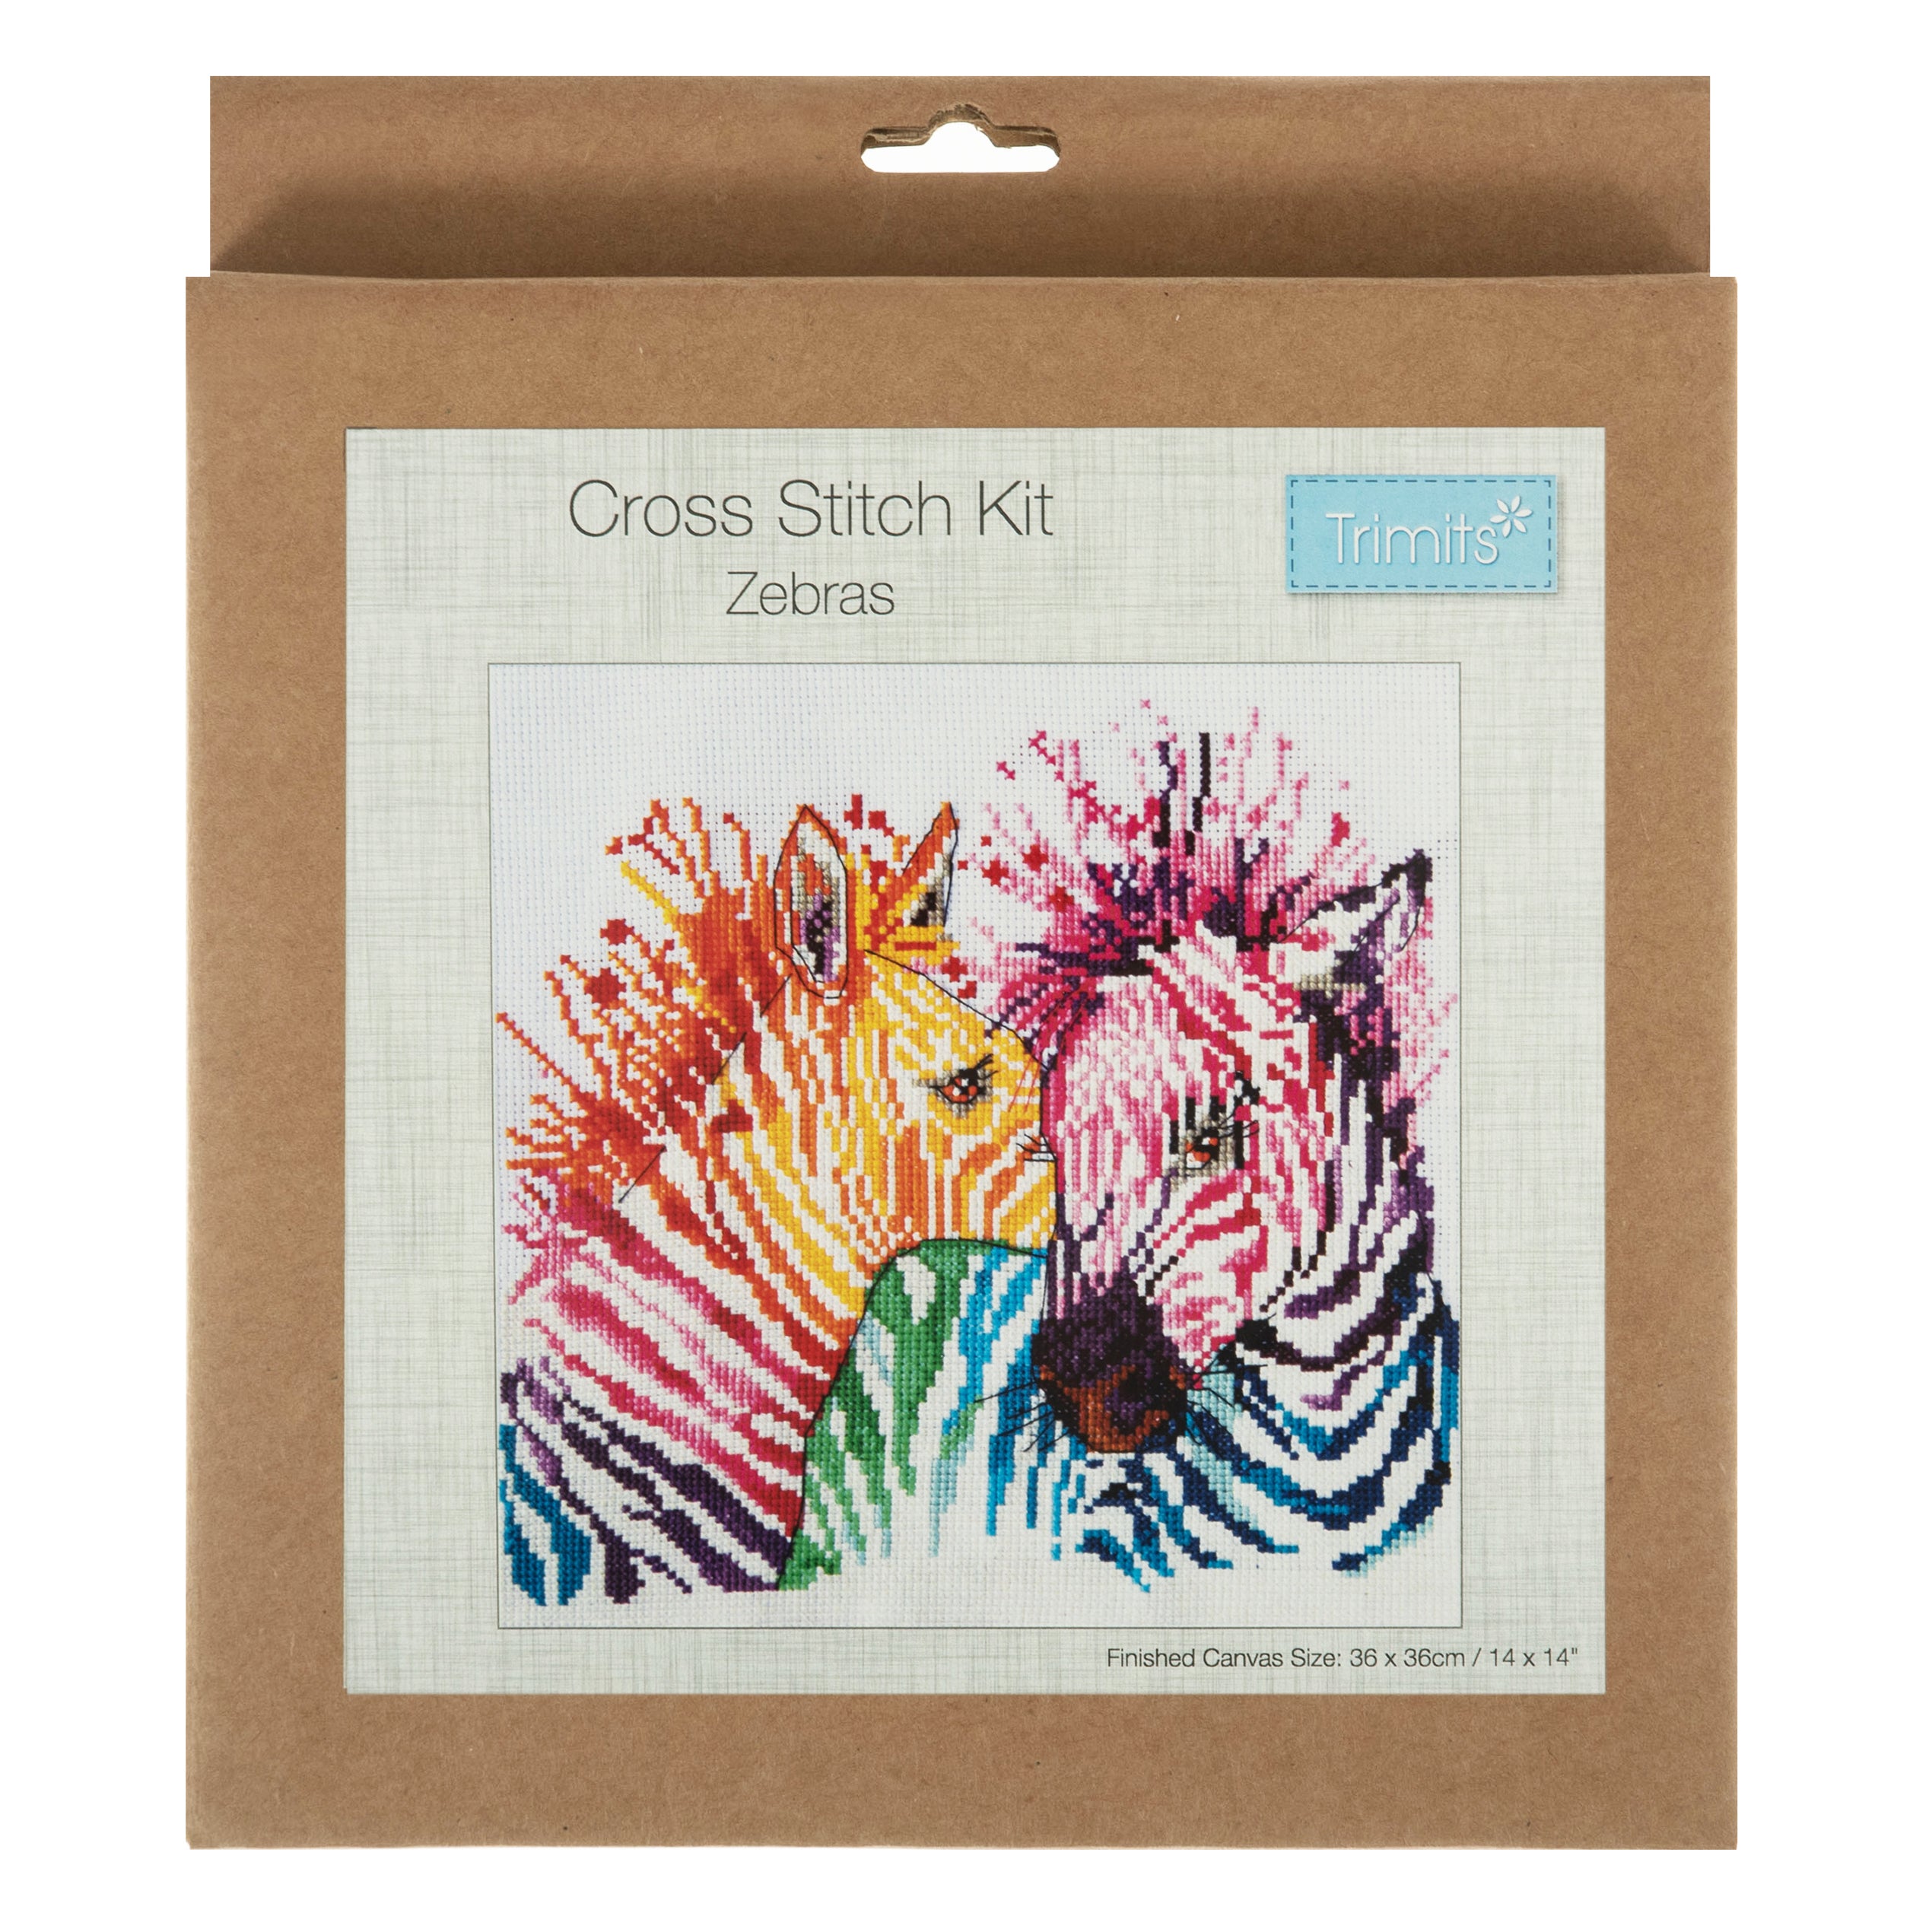 Trimits Large Cross Stitch Kit: Zebras